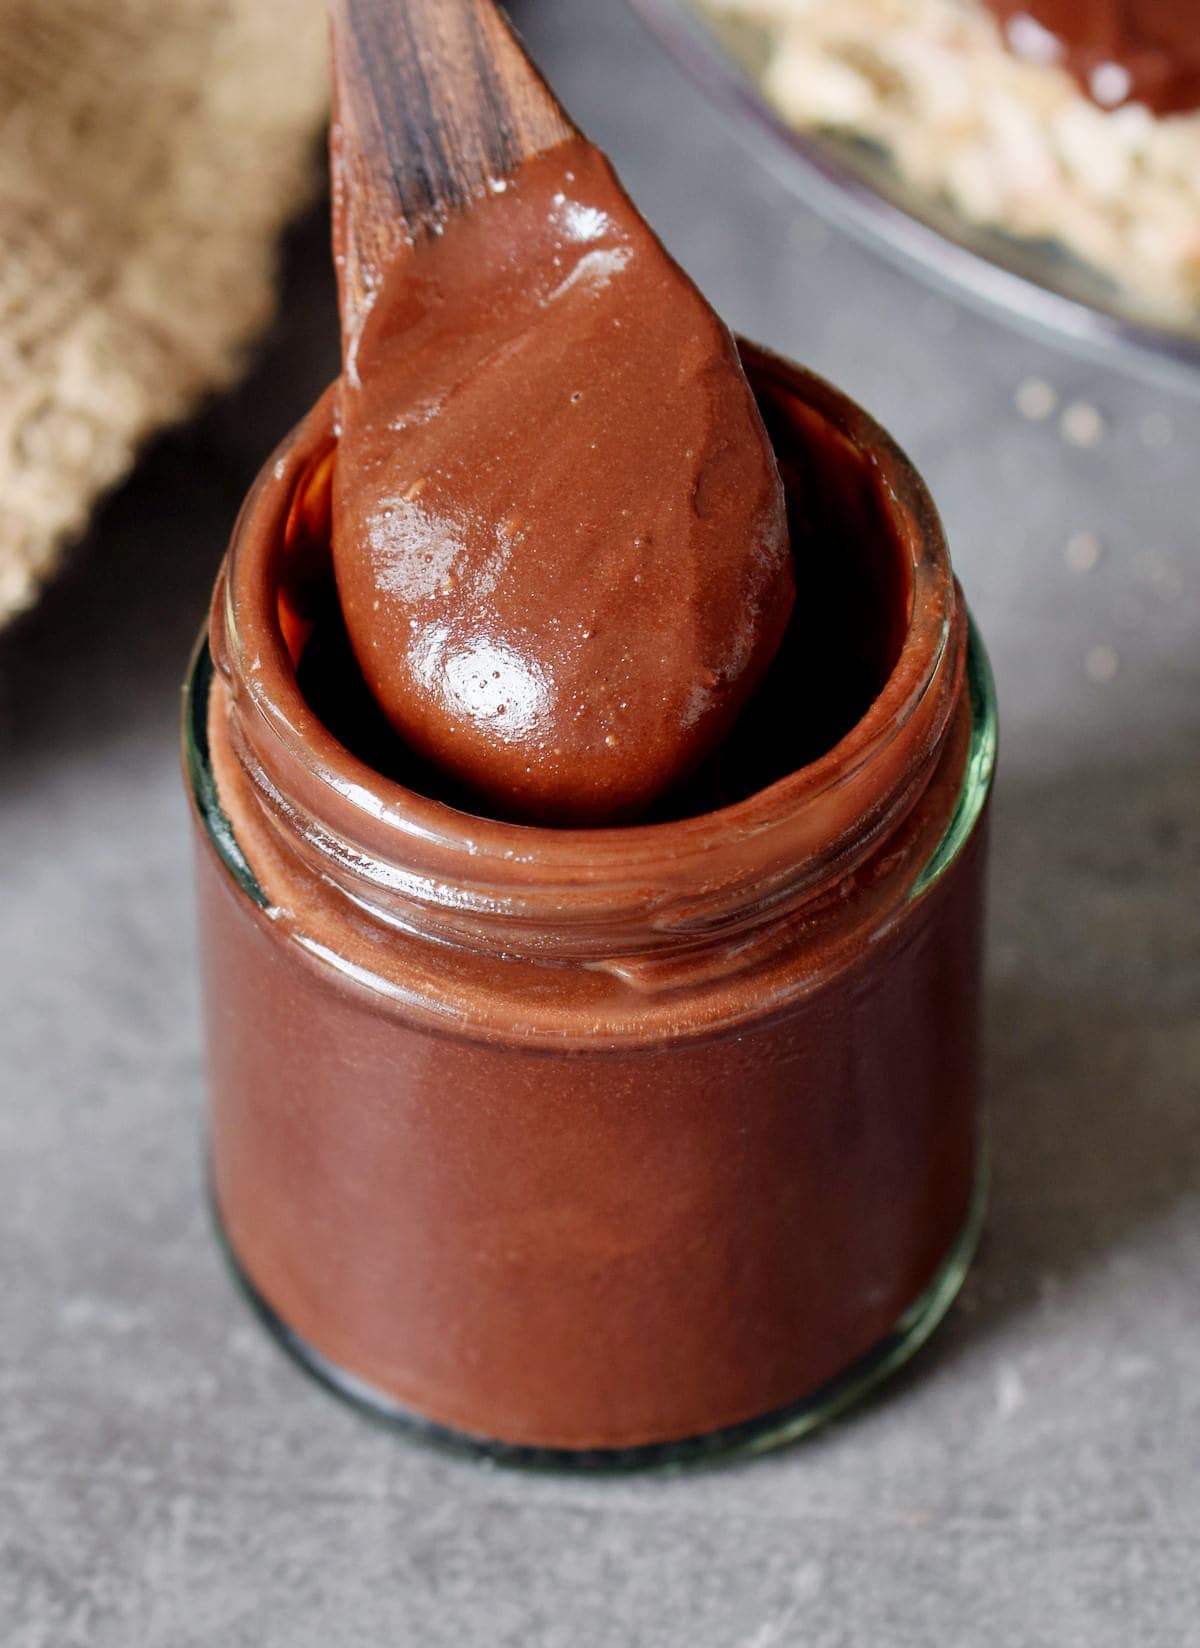 hazelnut chocolate spread in a jar with wooden spoon